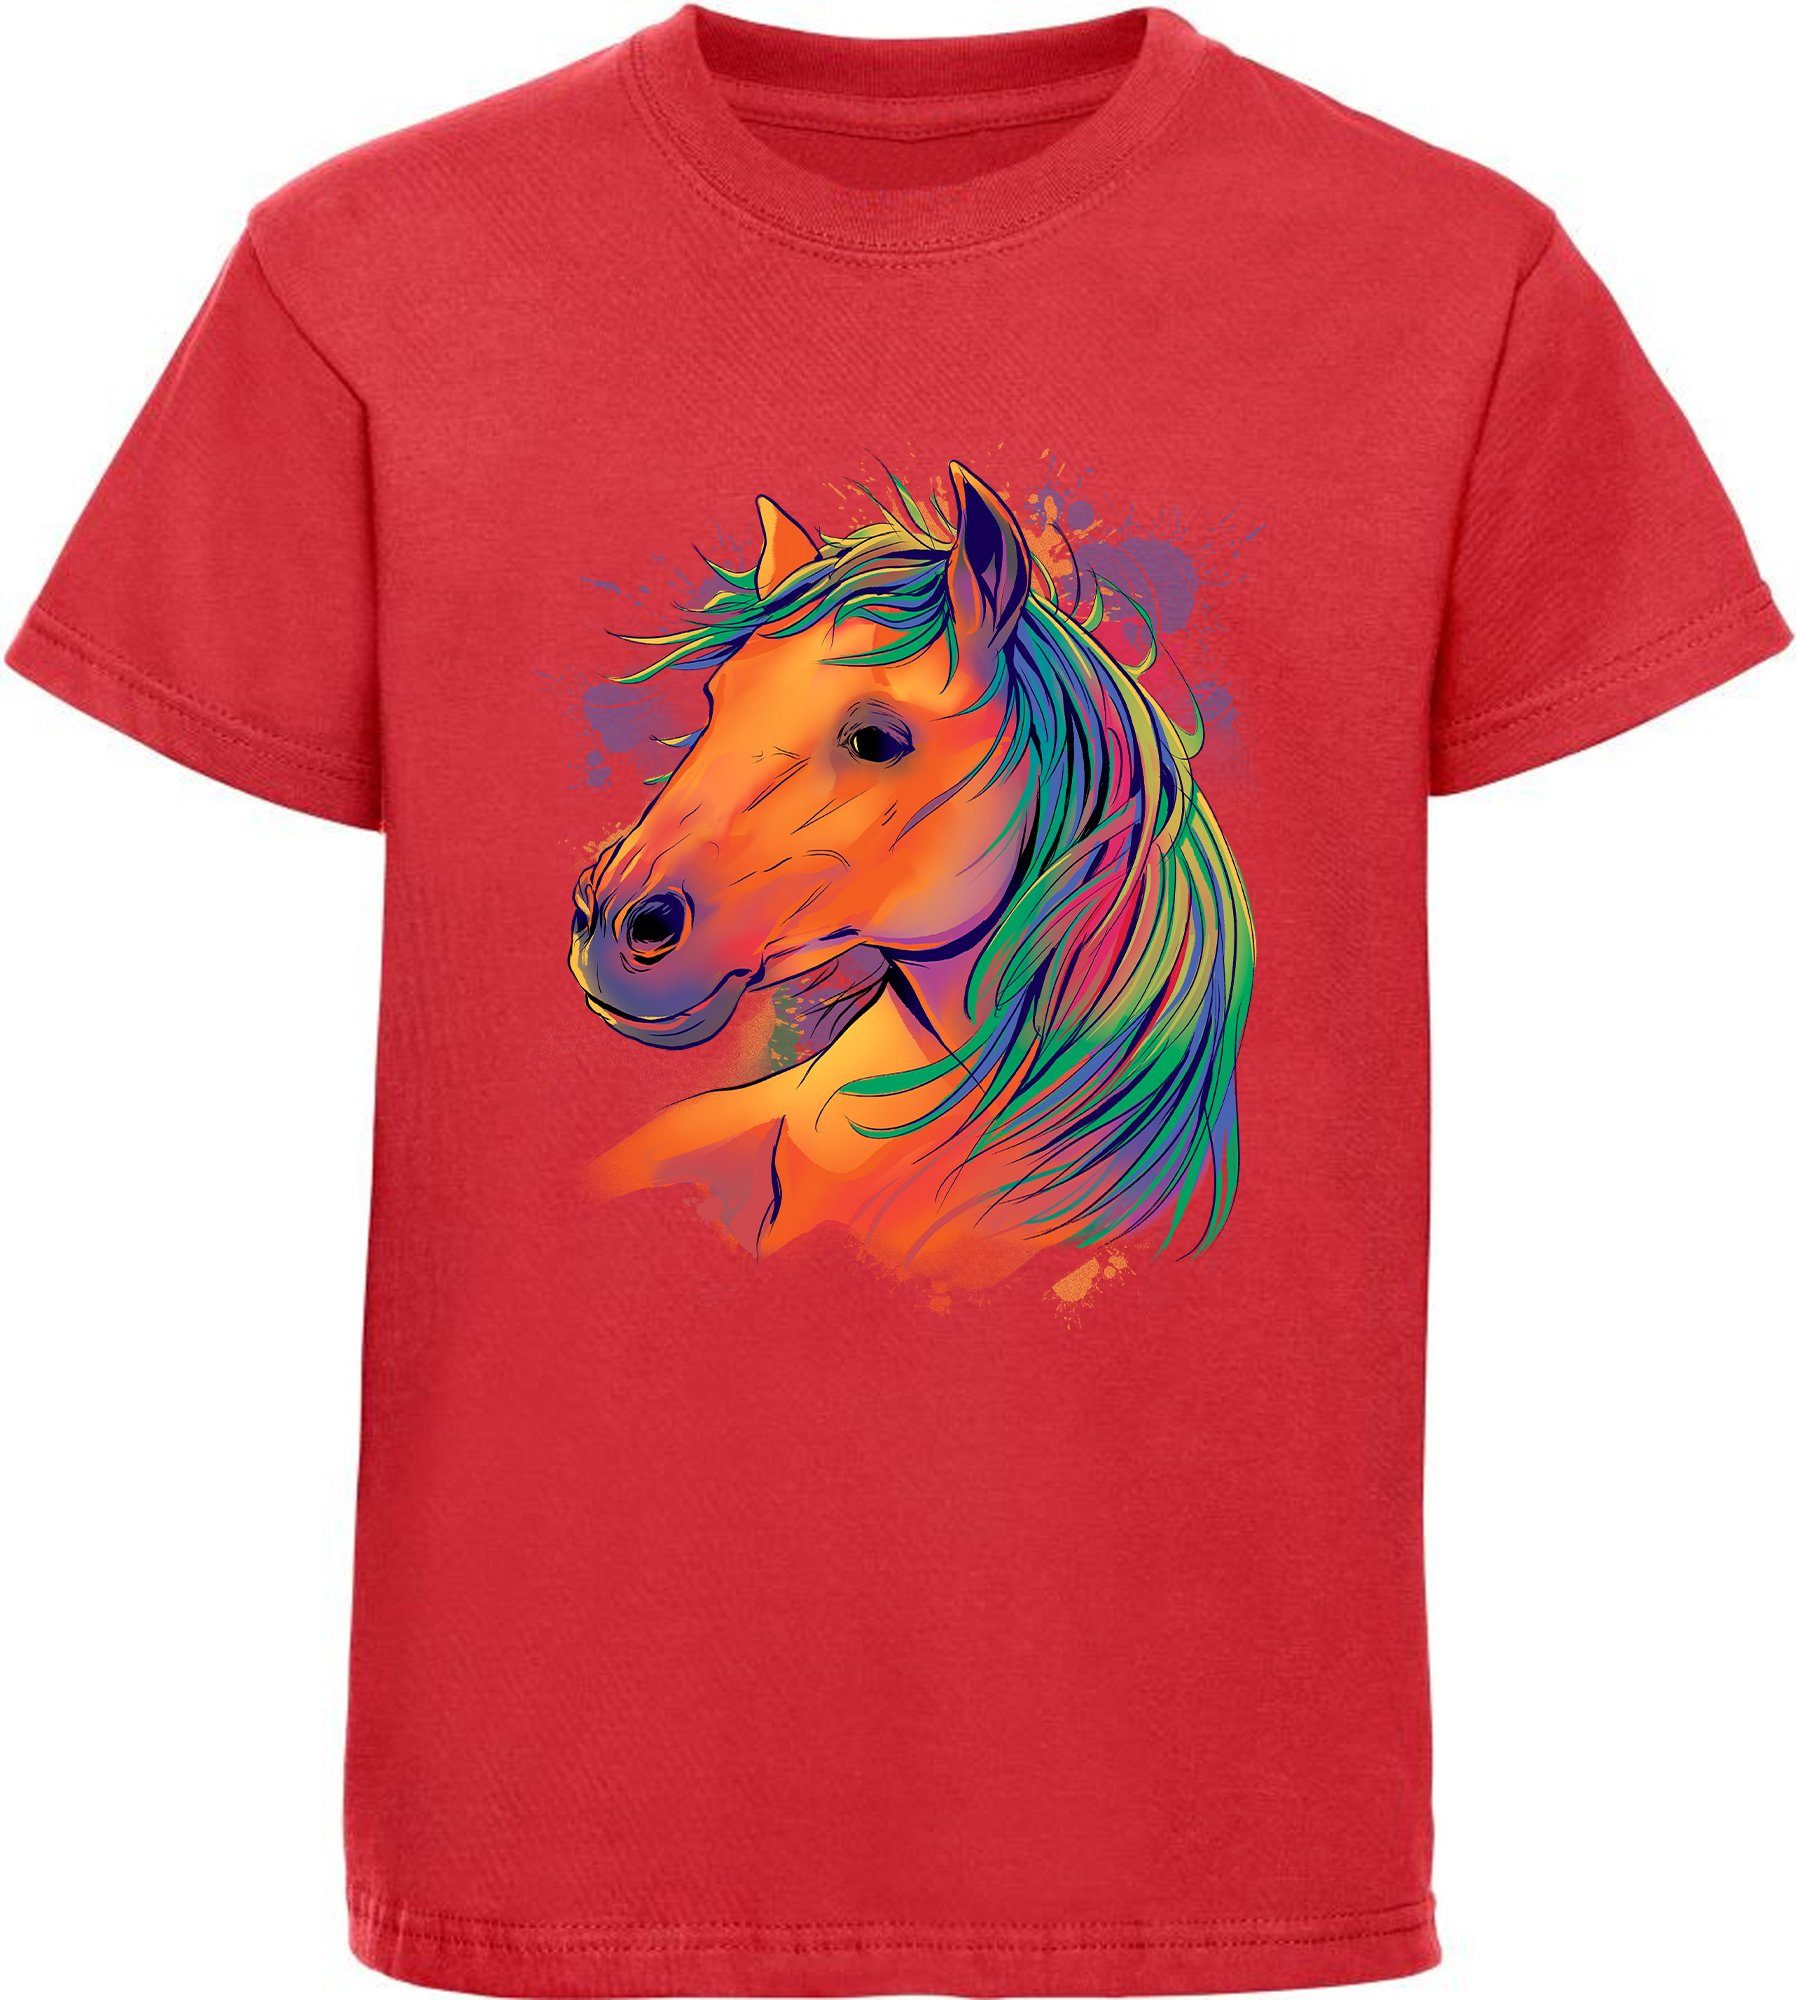 MyDesign24 Print-Shirt bedrucktes Mädchen T-Shirt - Pferdekopf in Ölfarben Baumwollshirt mit Aufdruck, i167 rot